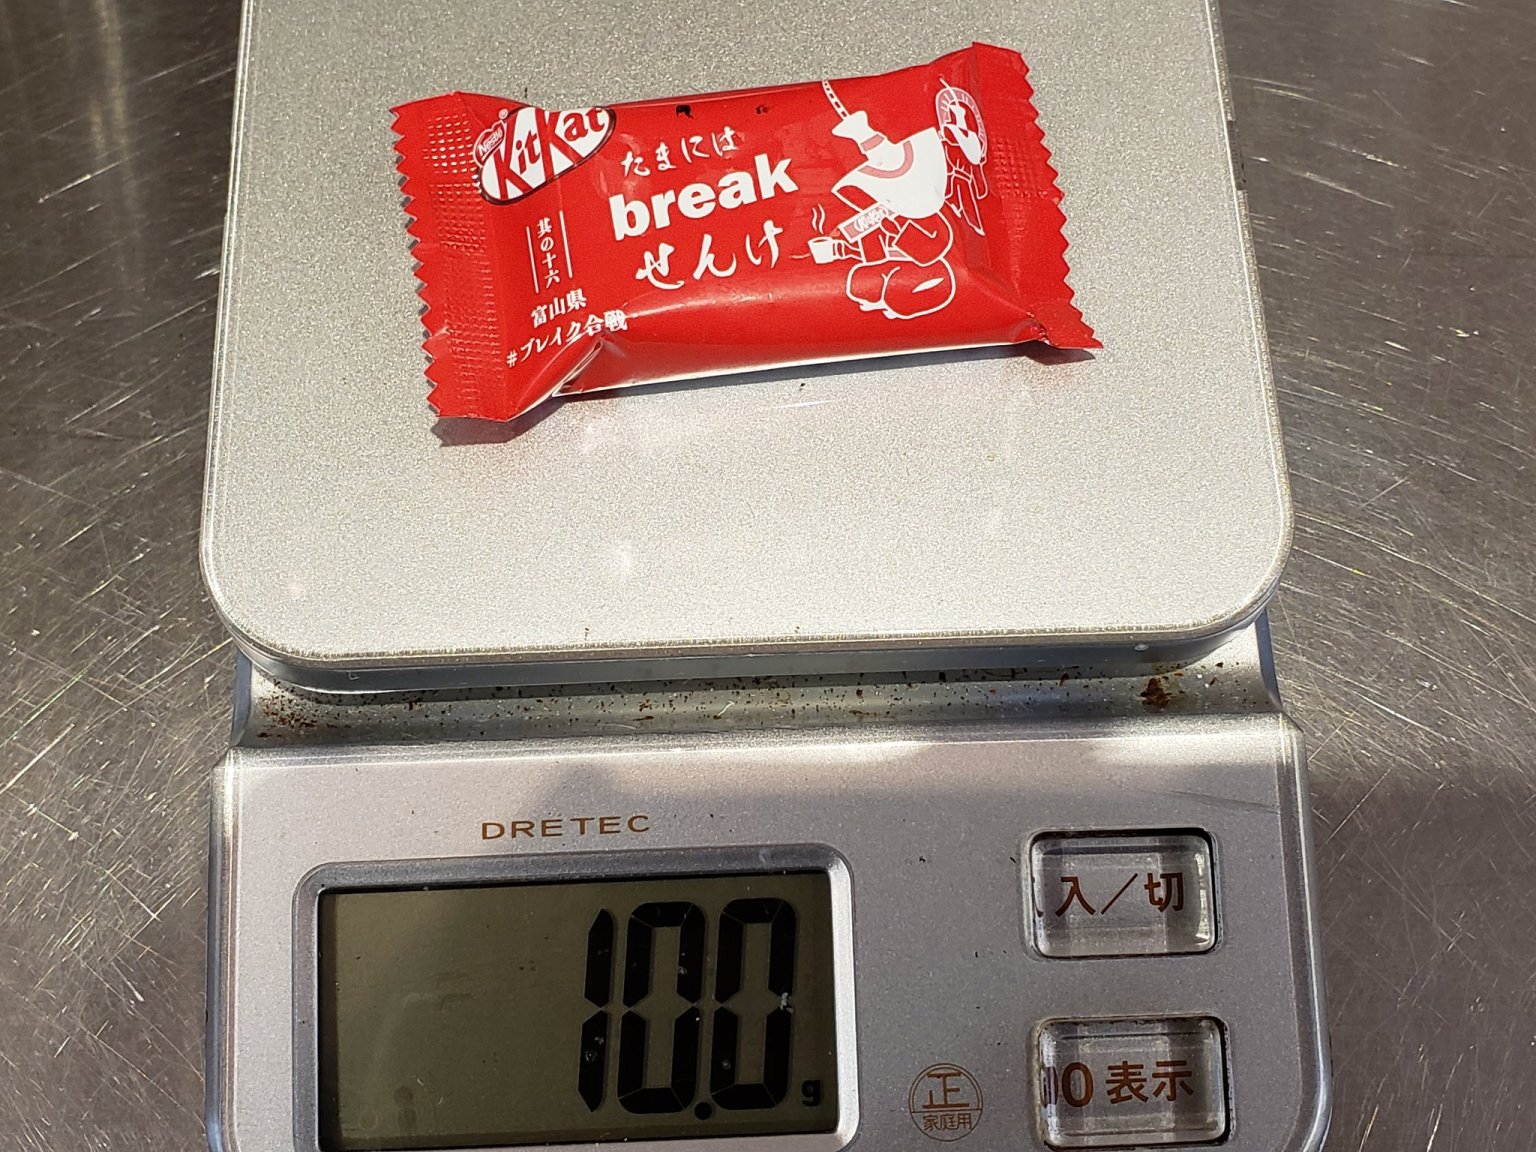 Japanese-KitKat-shrinkflation-Kit-Kat-Twitter-Nestle-Japan-chocolate-sweets-news-4.jpg